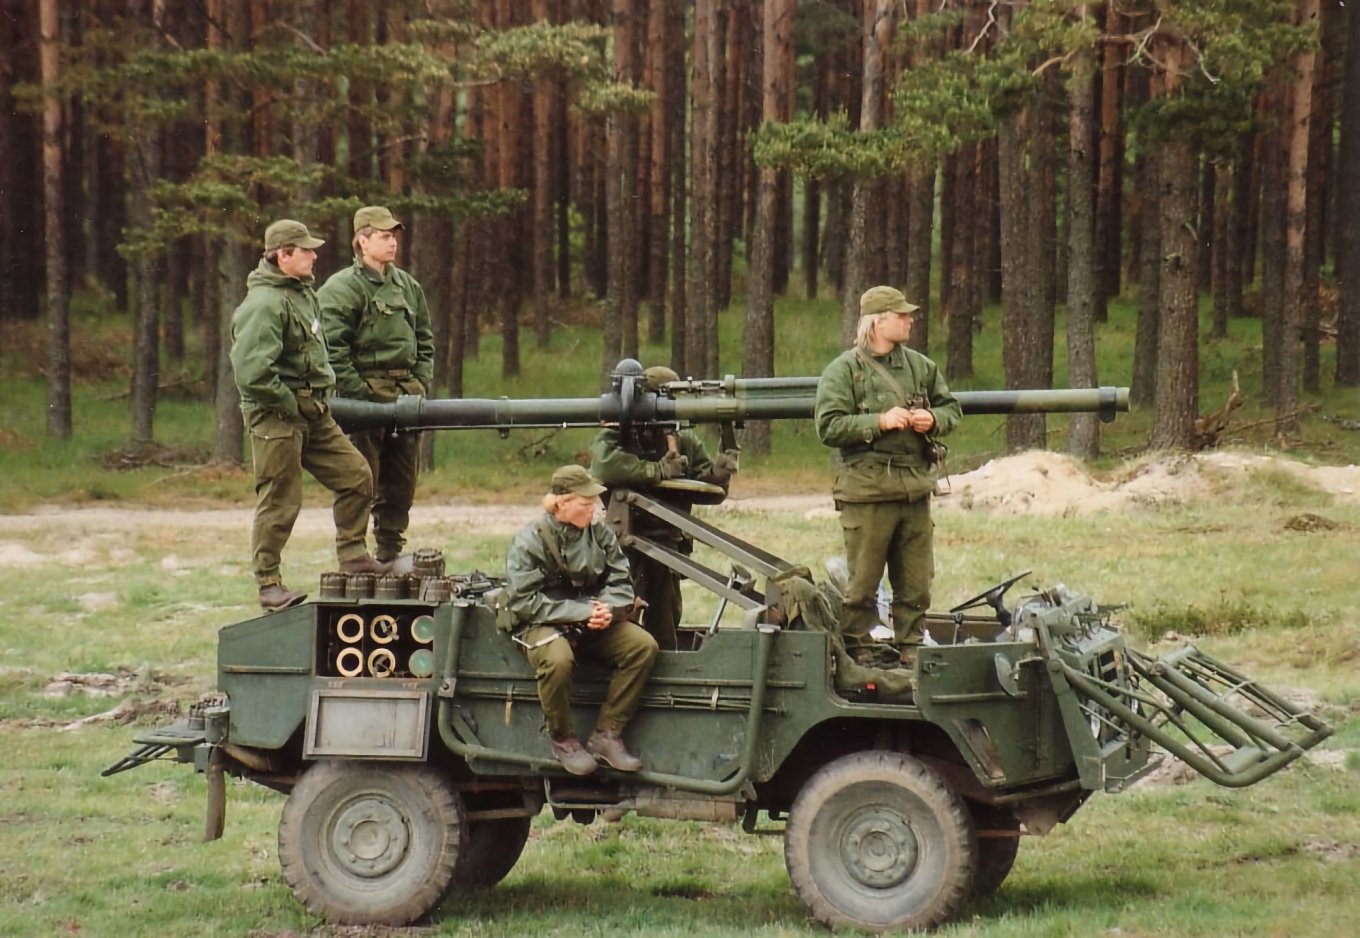 Swedish Pvpj 1110 recoilless gun mounted on a 